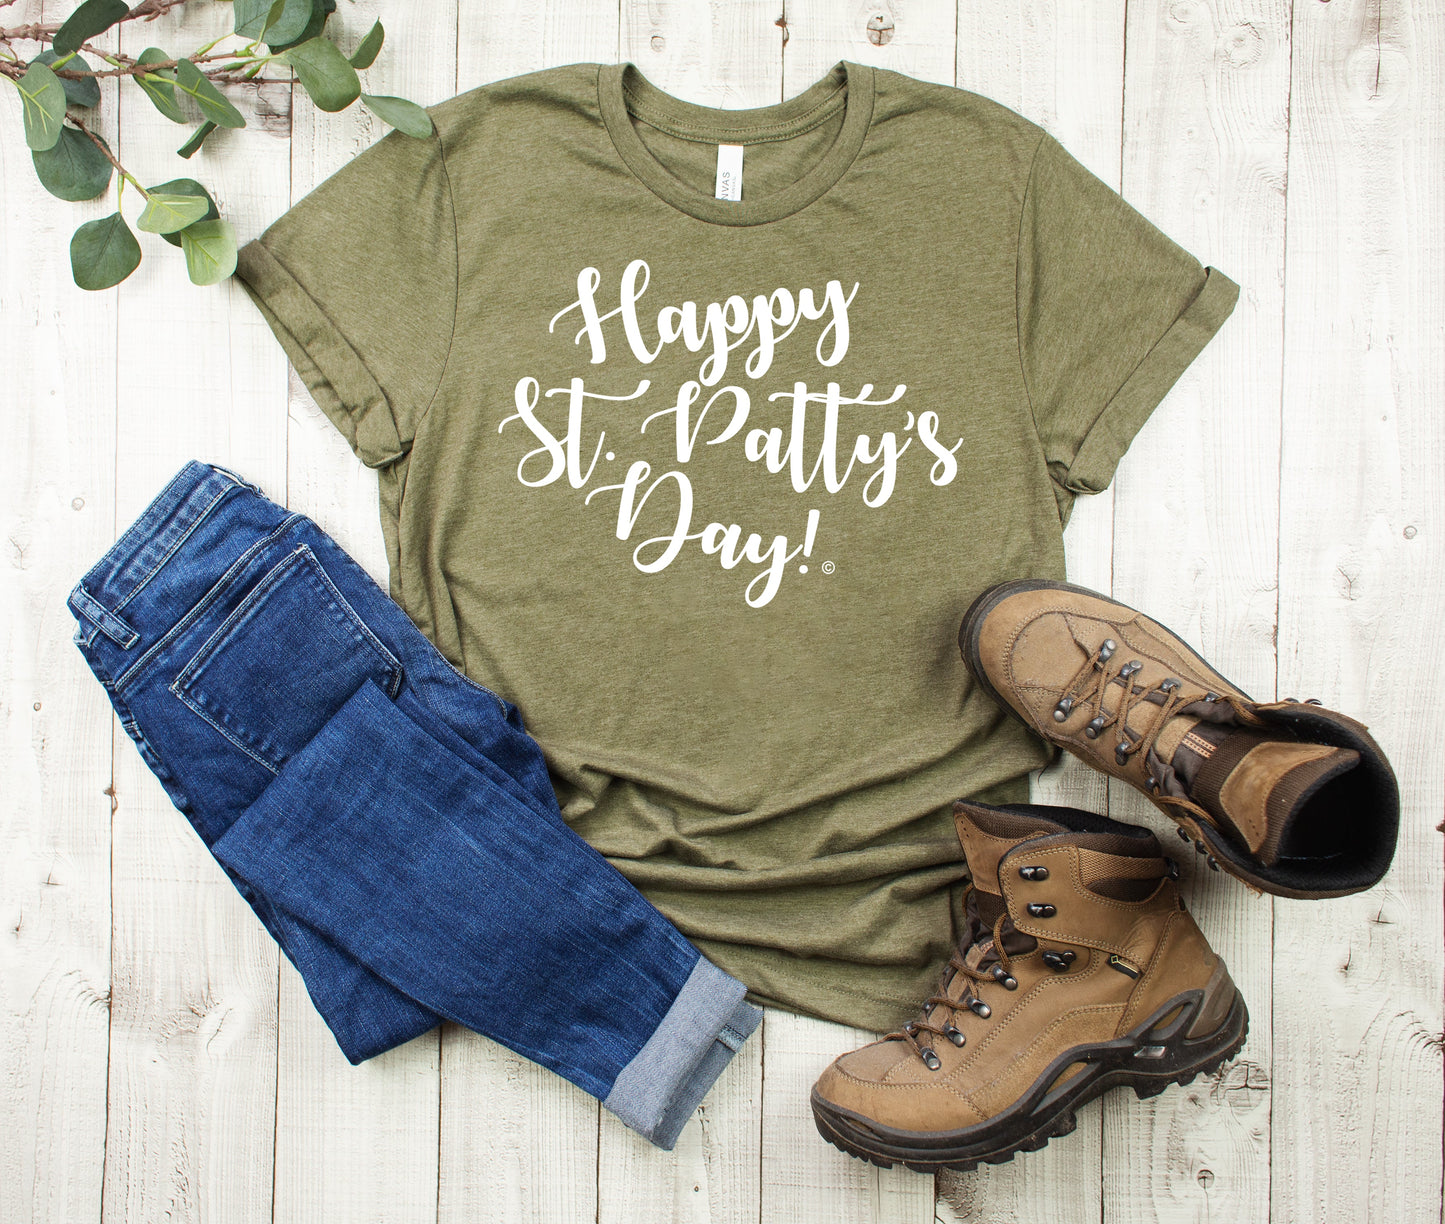 St. Patrick's Day T-shirt, Happy Saint Patty's Day Tee Shirt